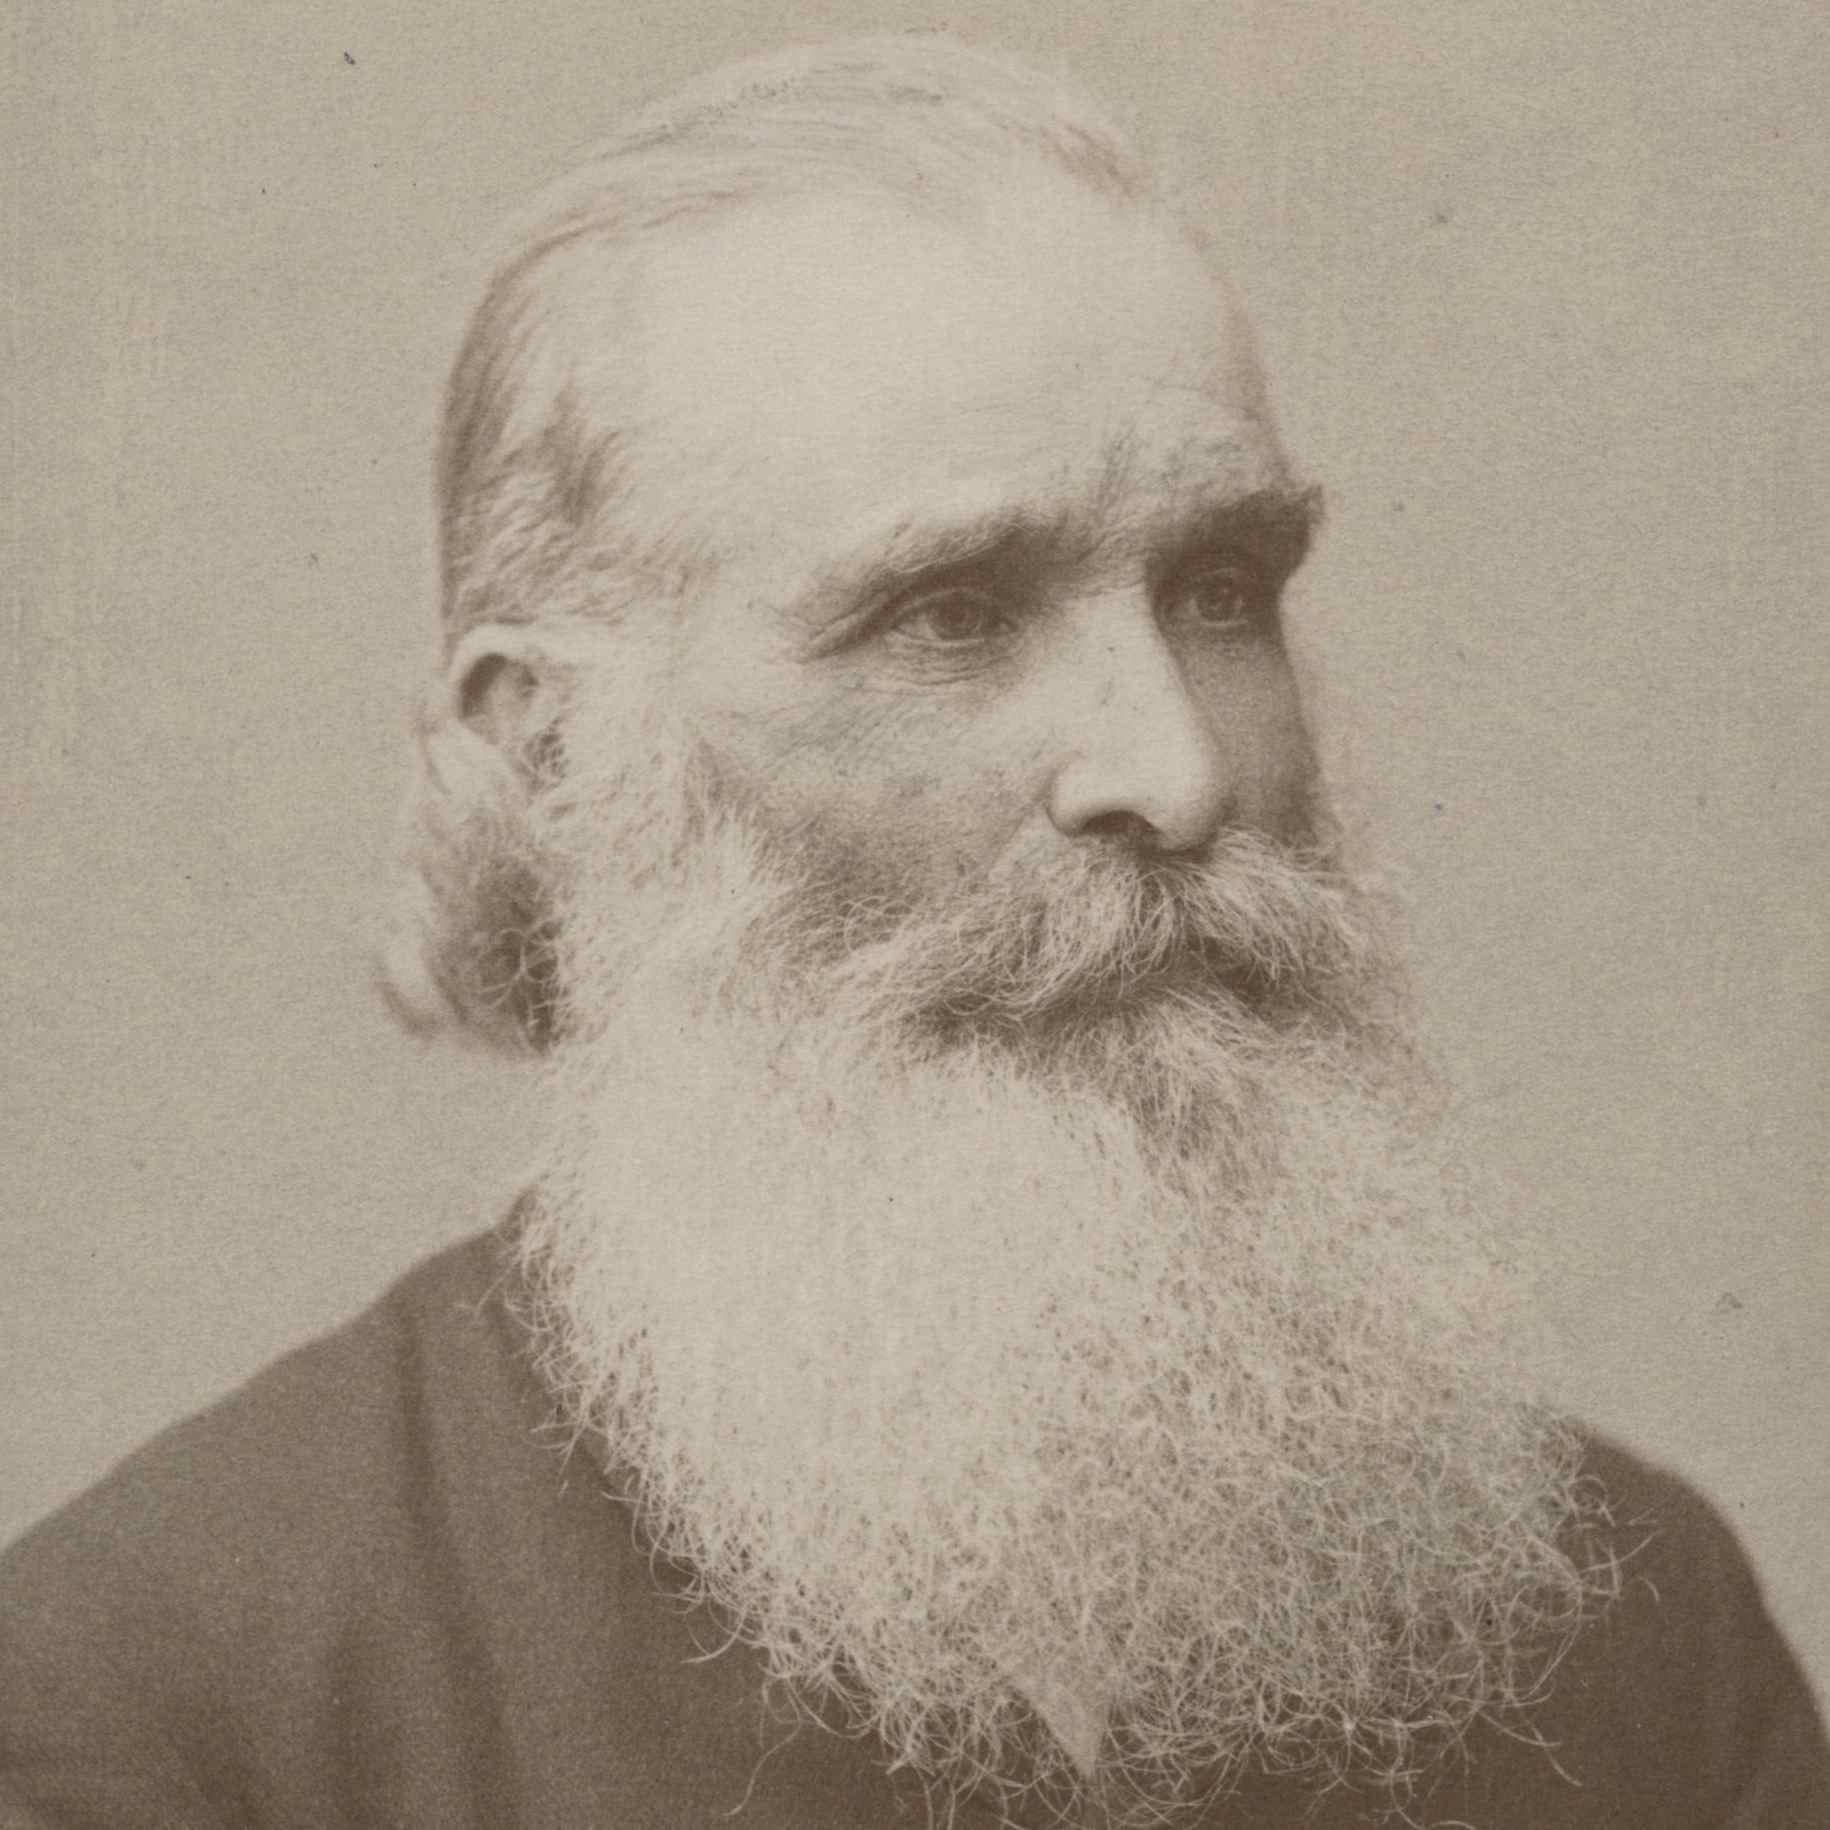 Peter Adolph Forsgren (1826 - 1908)